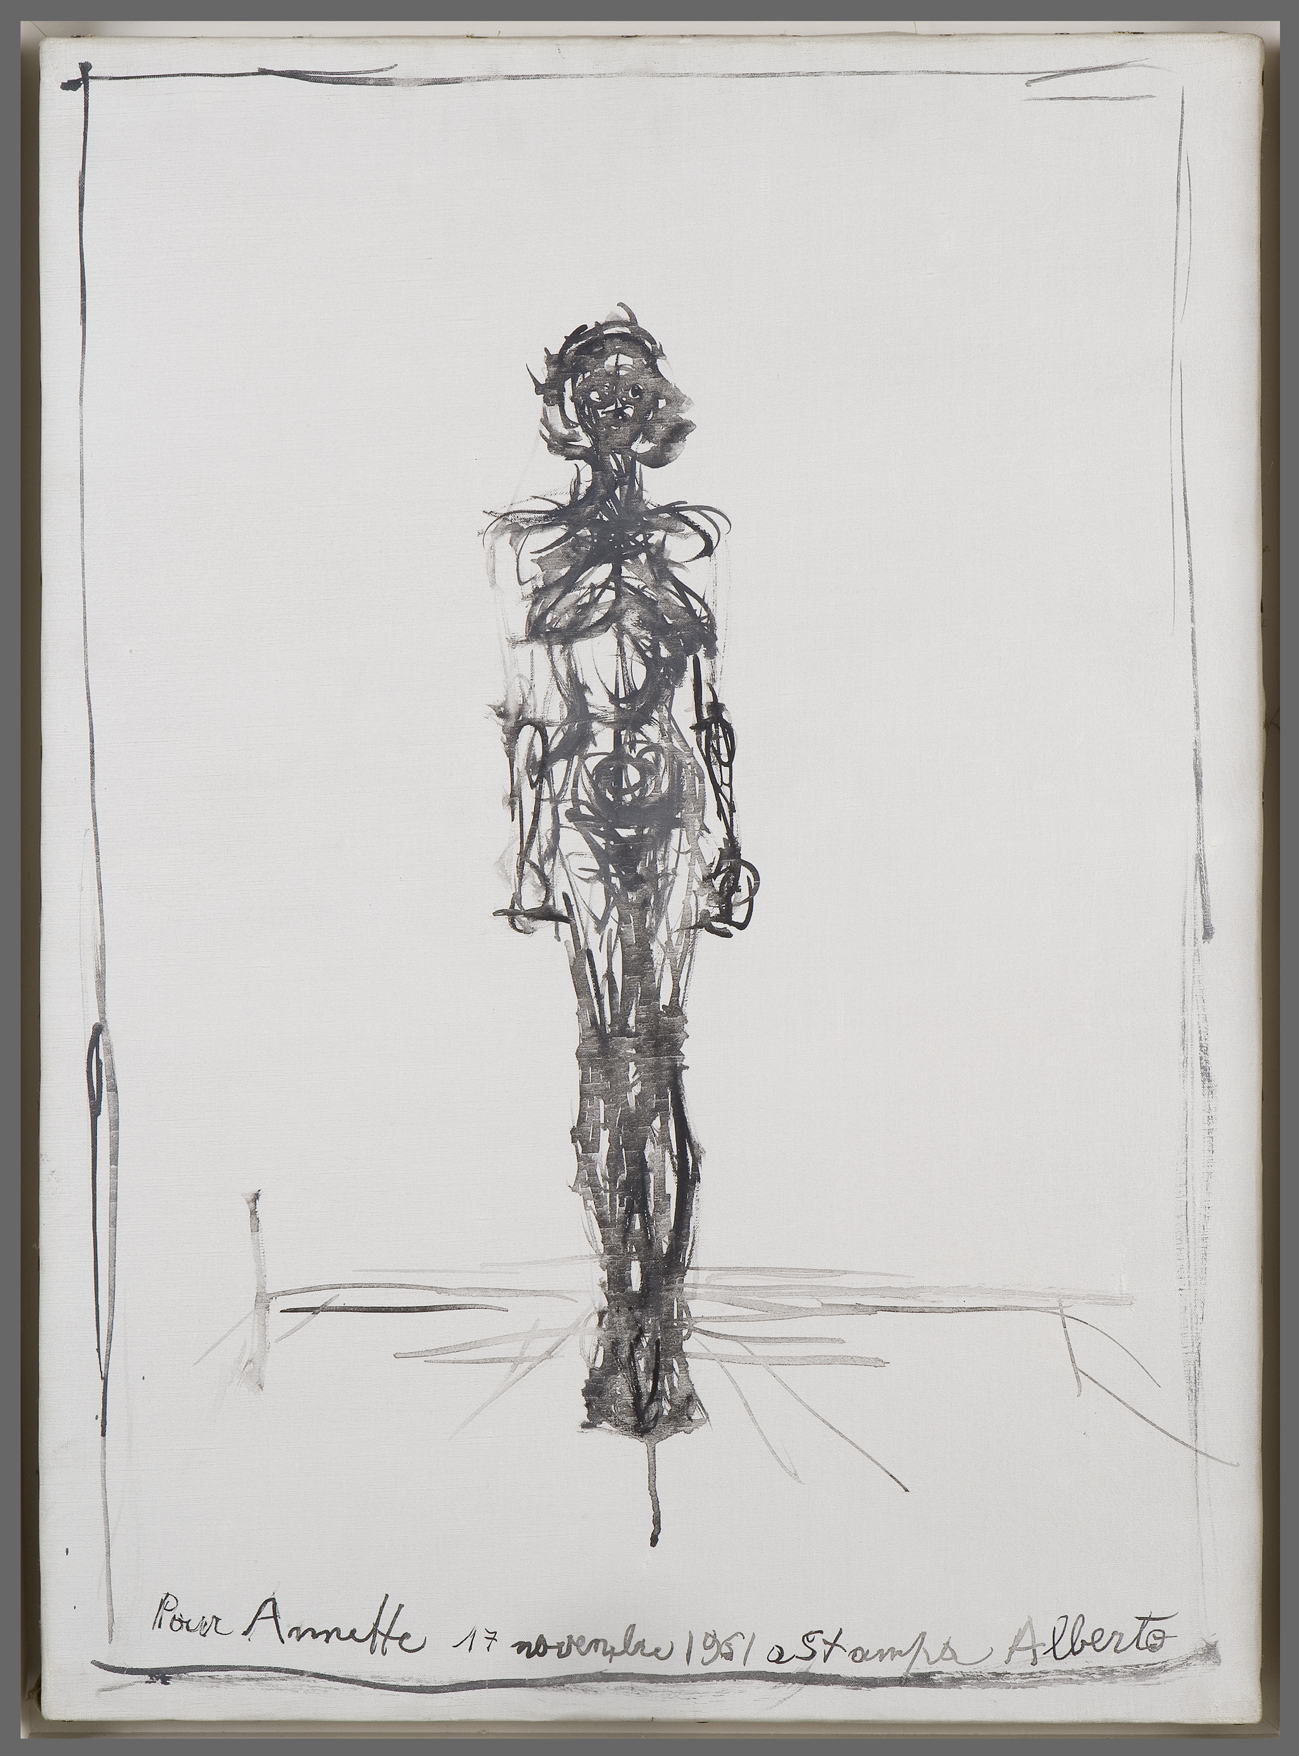 Ein Gemälde von Alberto Giacomettis nackter Ehefrah Annette Giacommetti